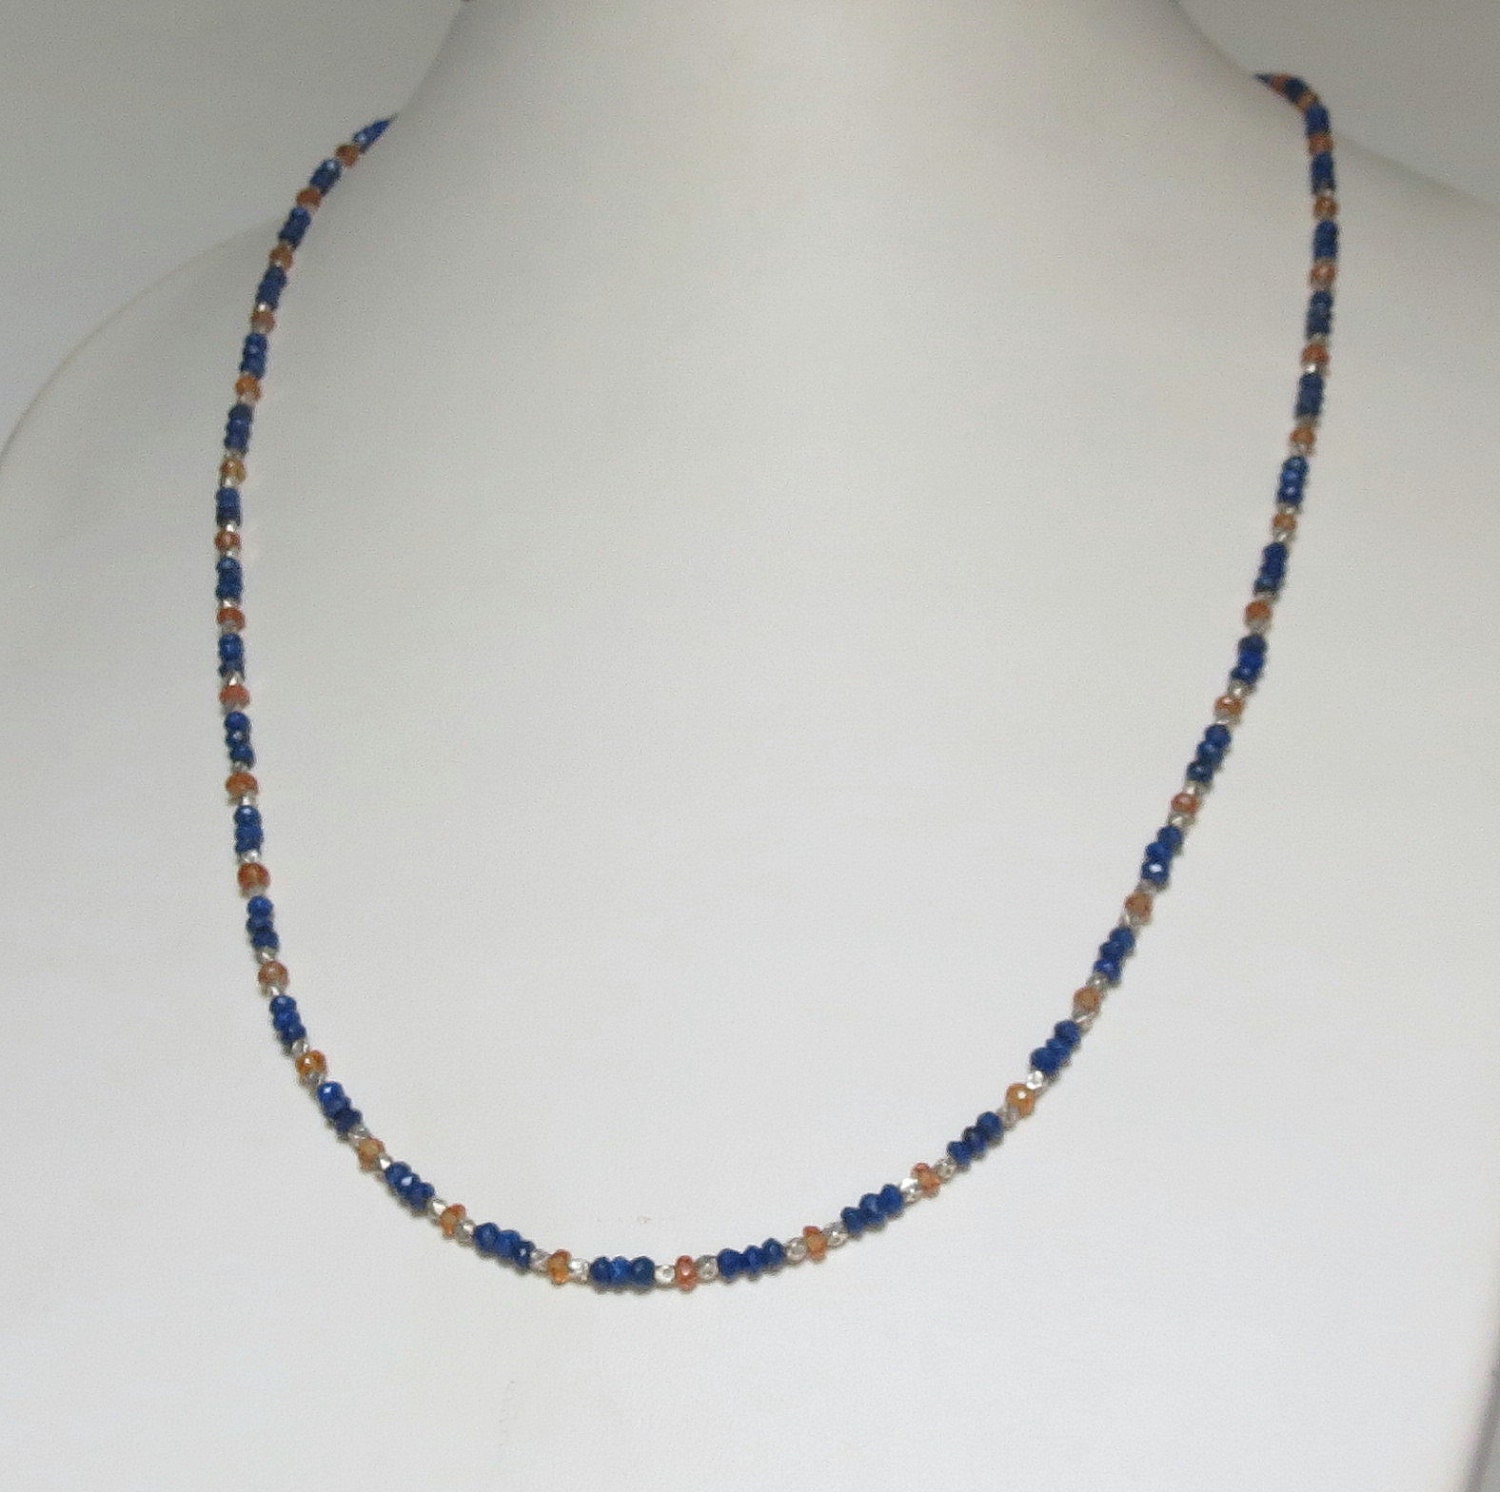 Handmade Jewelry Blue and Orange Sapphires September | Etsy